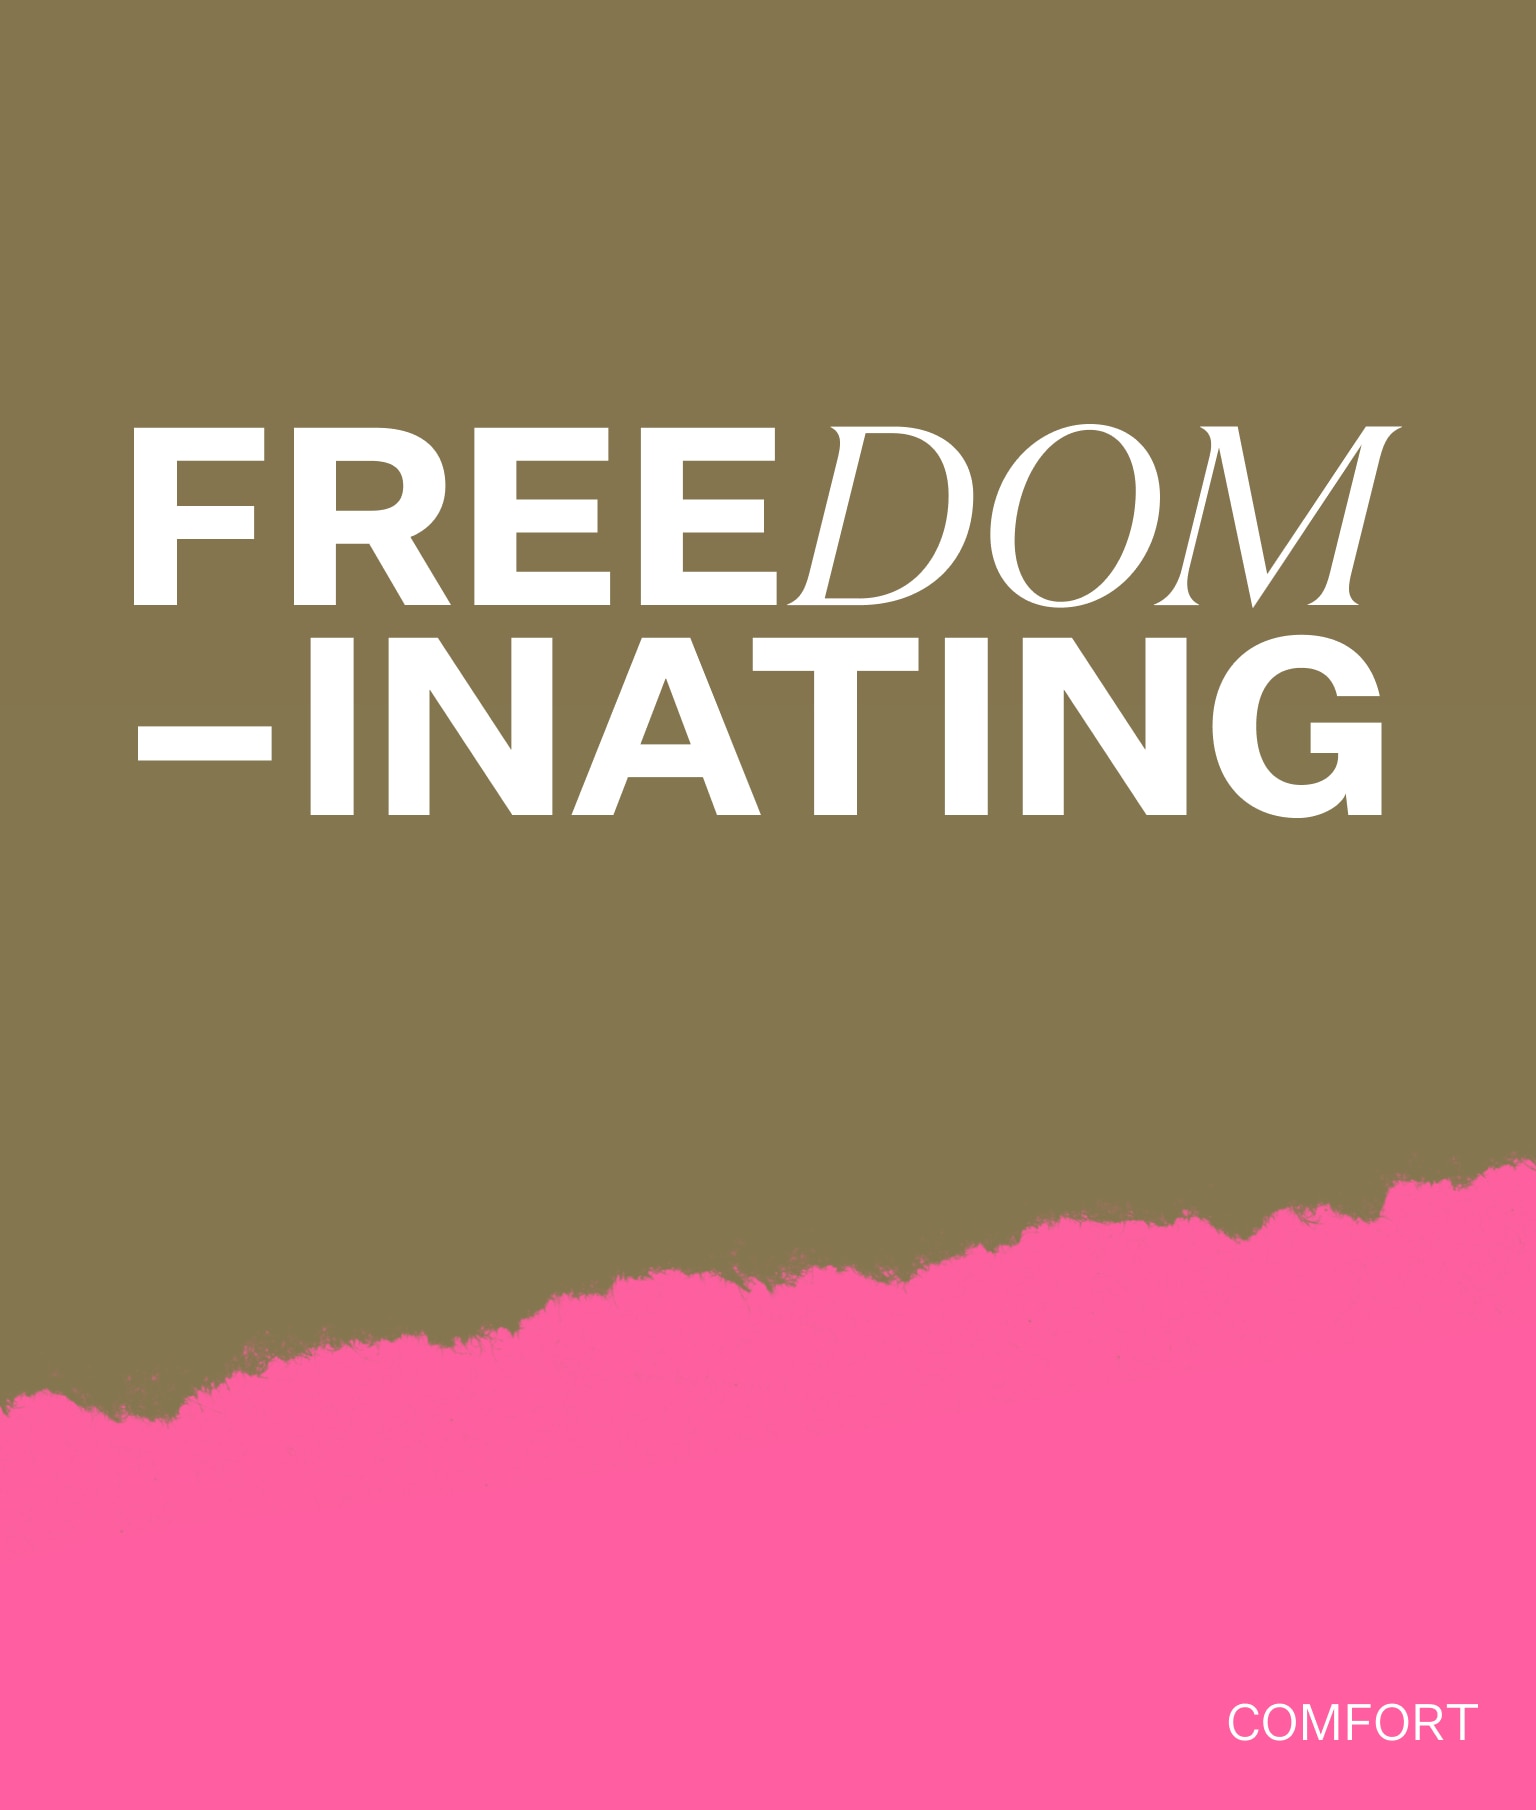 Freedominating - Three new ranges, one goal: comfort